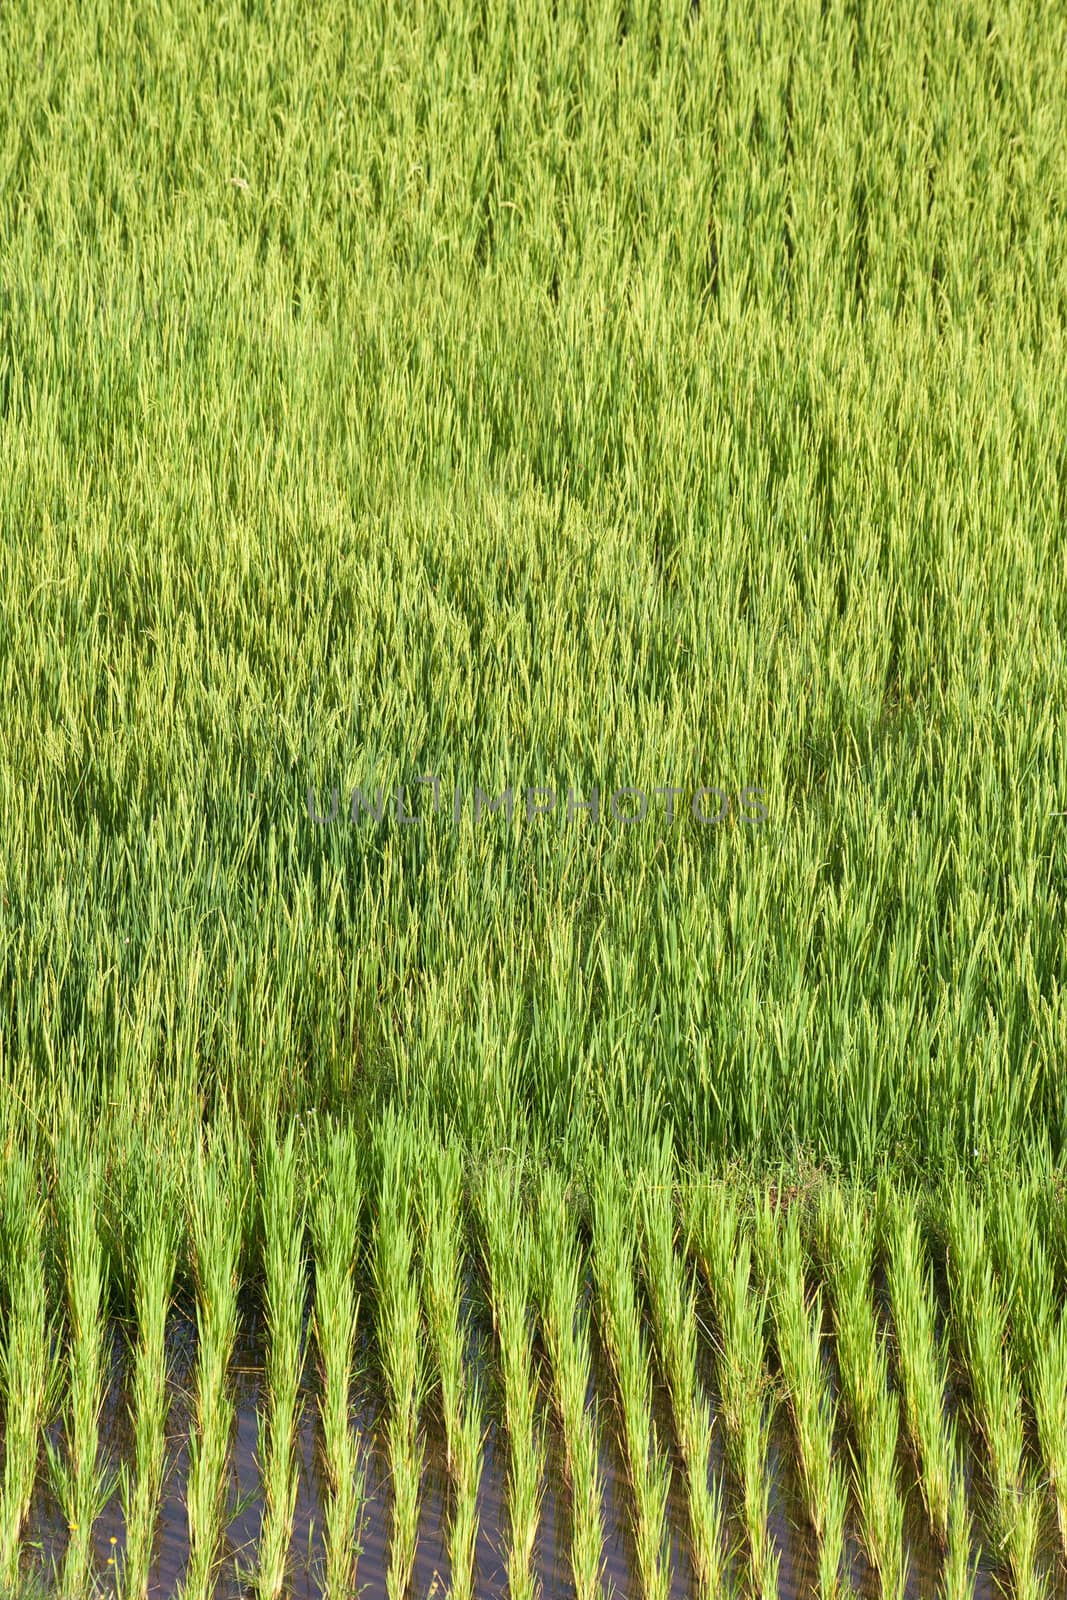 Green paddy field in Madagascar